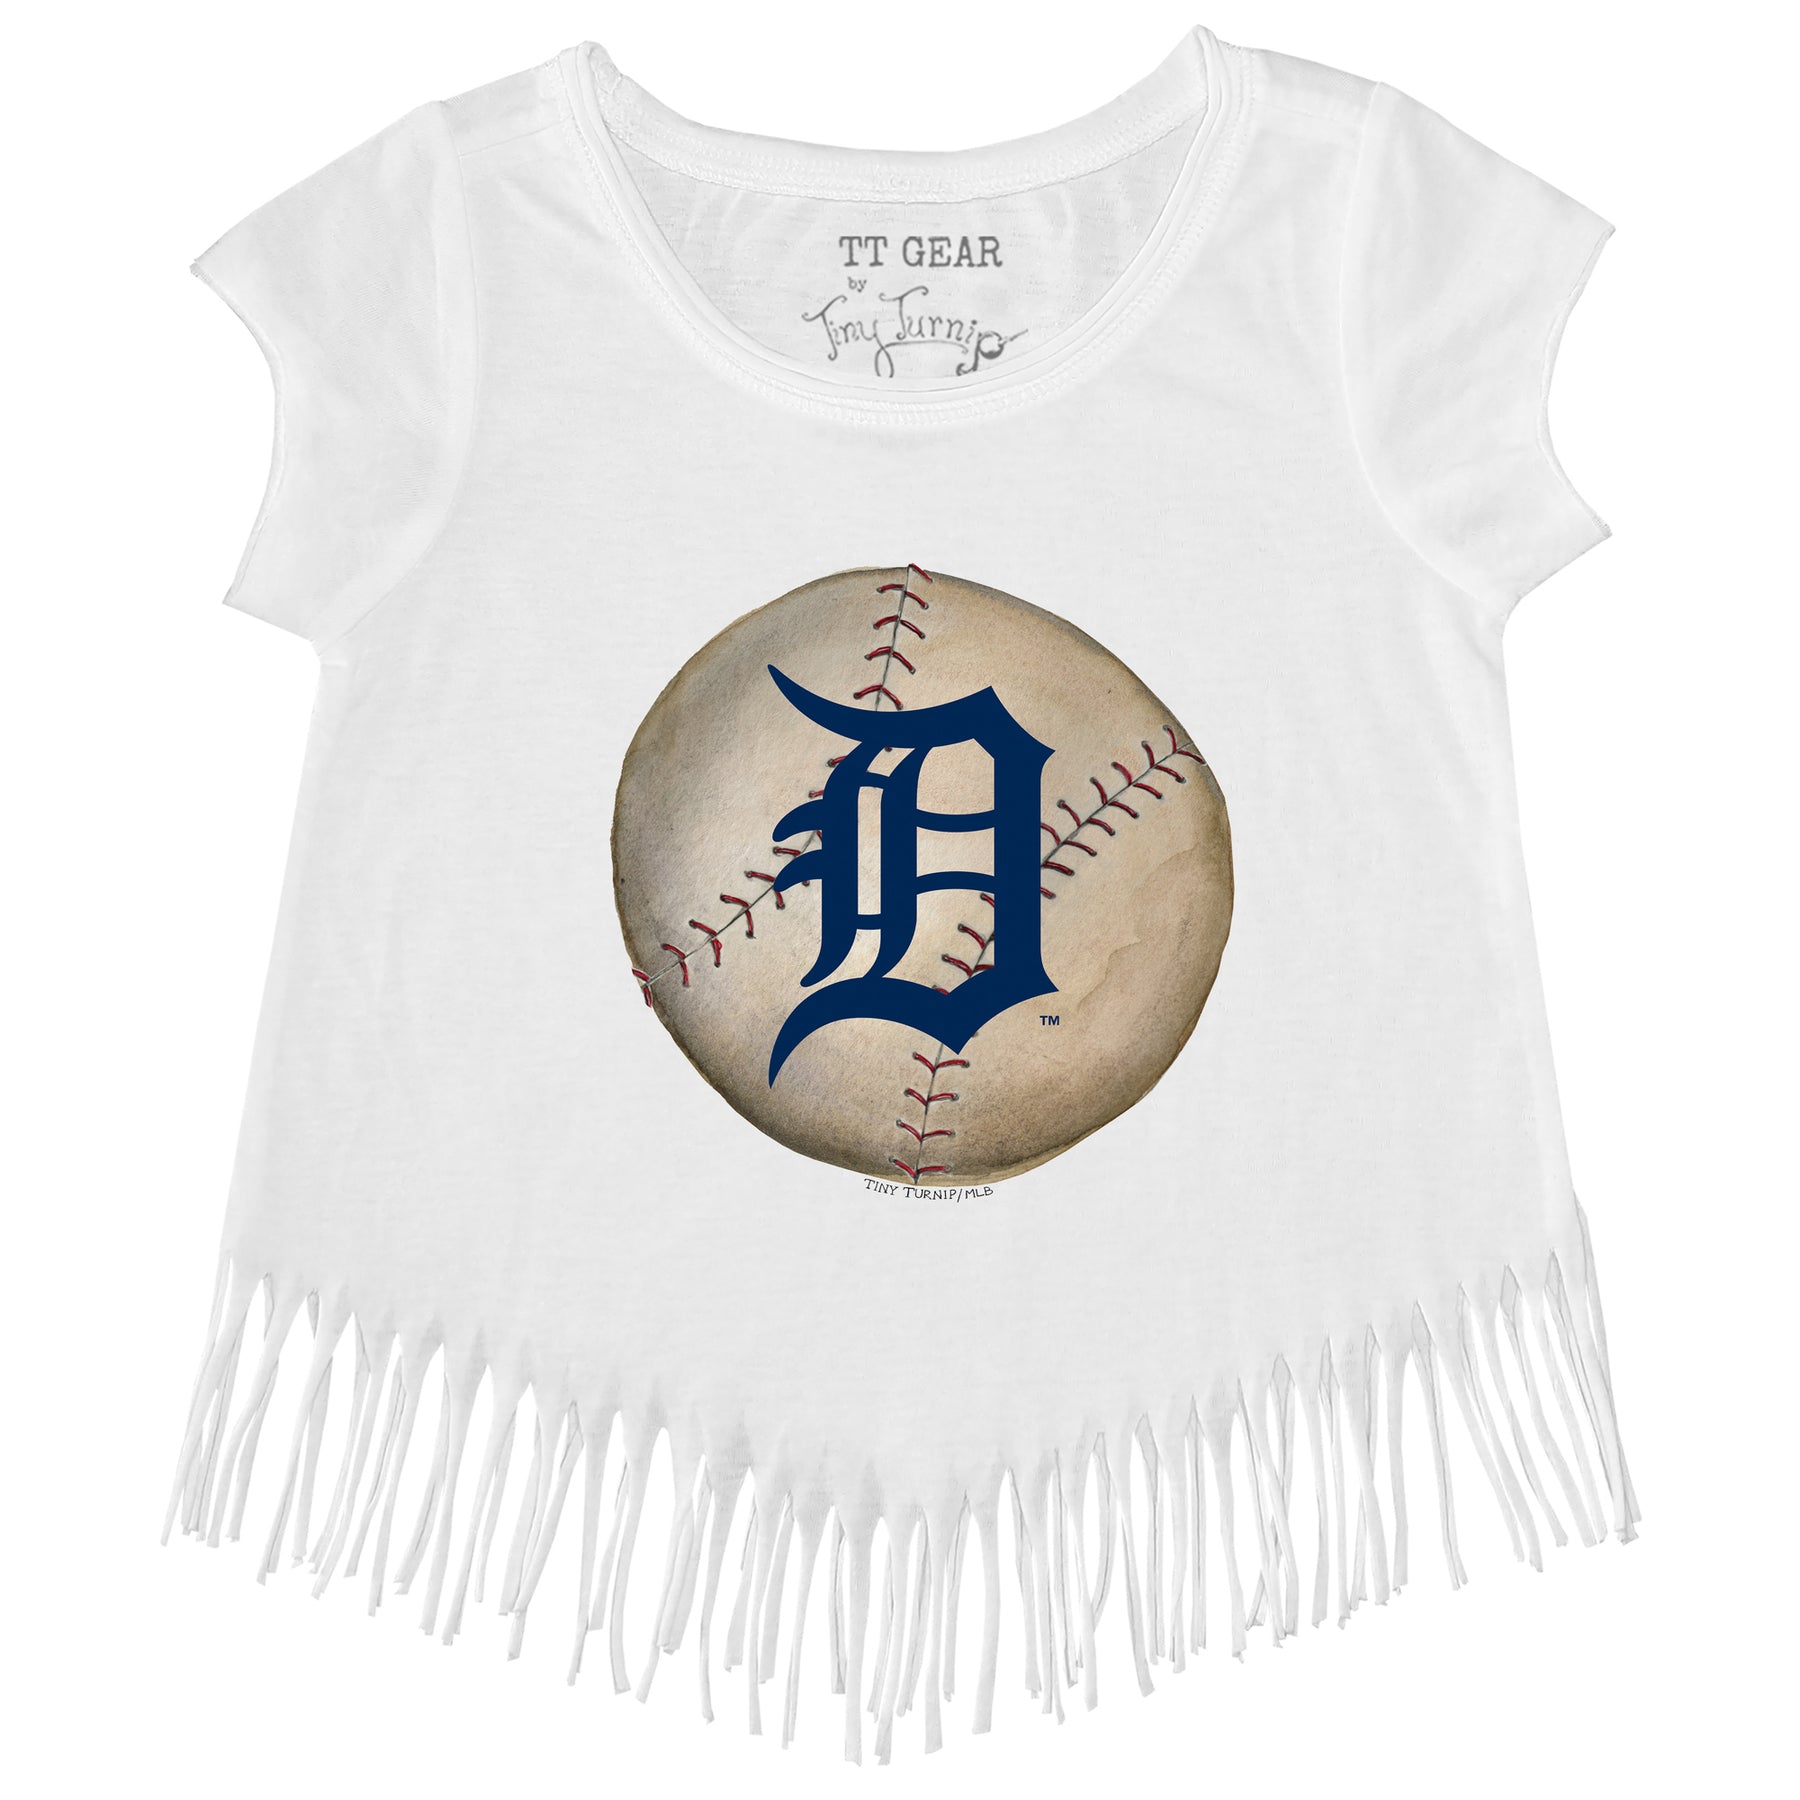 Detroit Tigers Stitched Baseball Fringe Tee